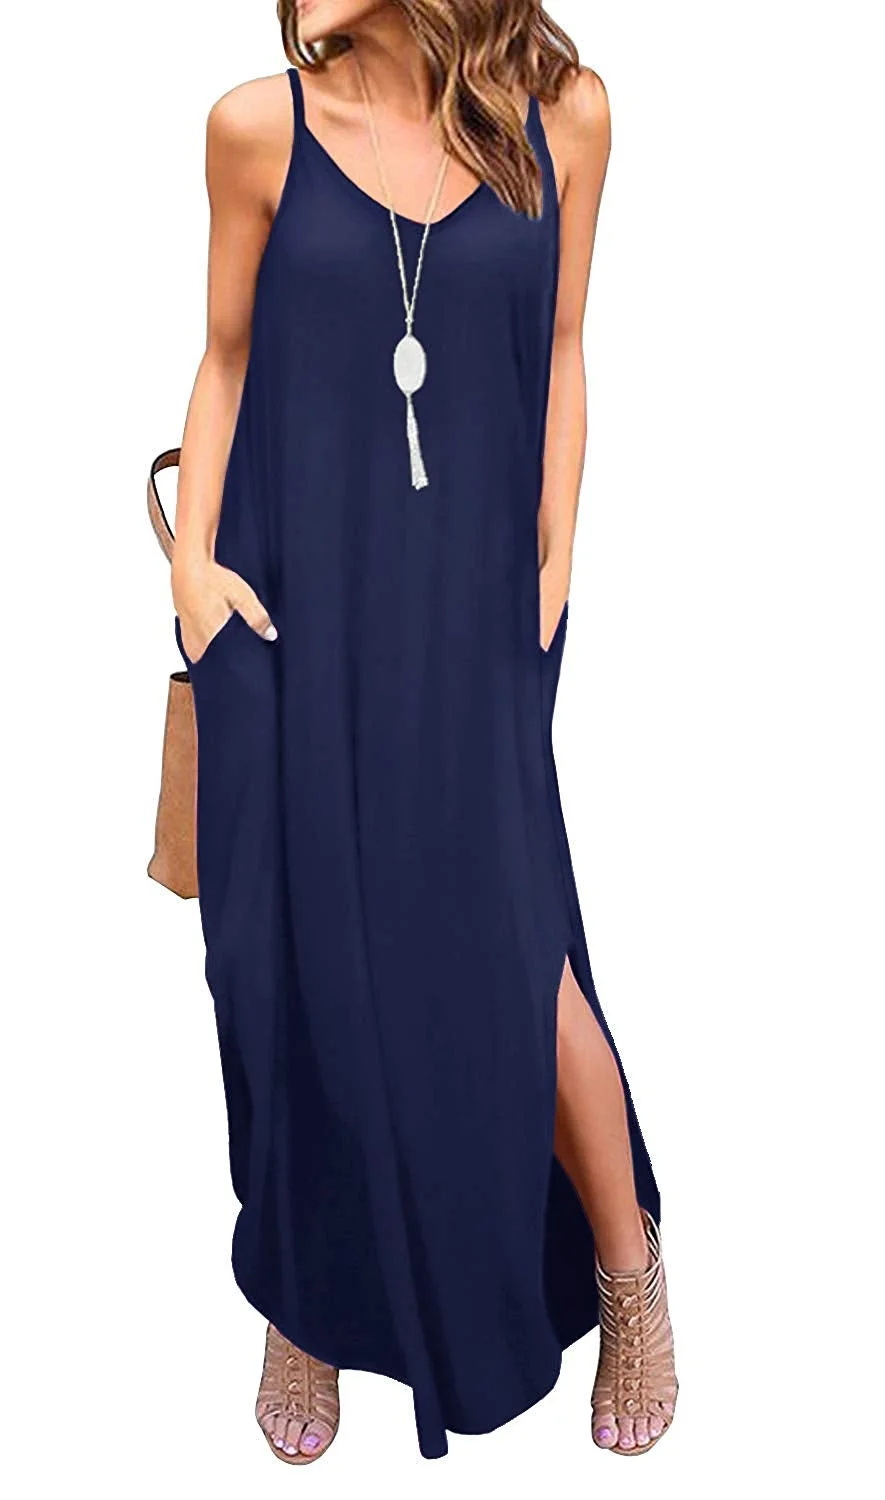 Women's Summer Casual Loose Dress Beach Cover Up Long Cami Maxi Dresses